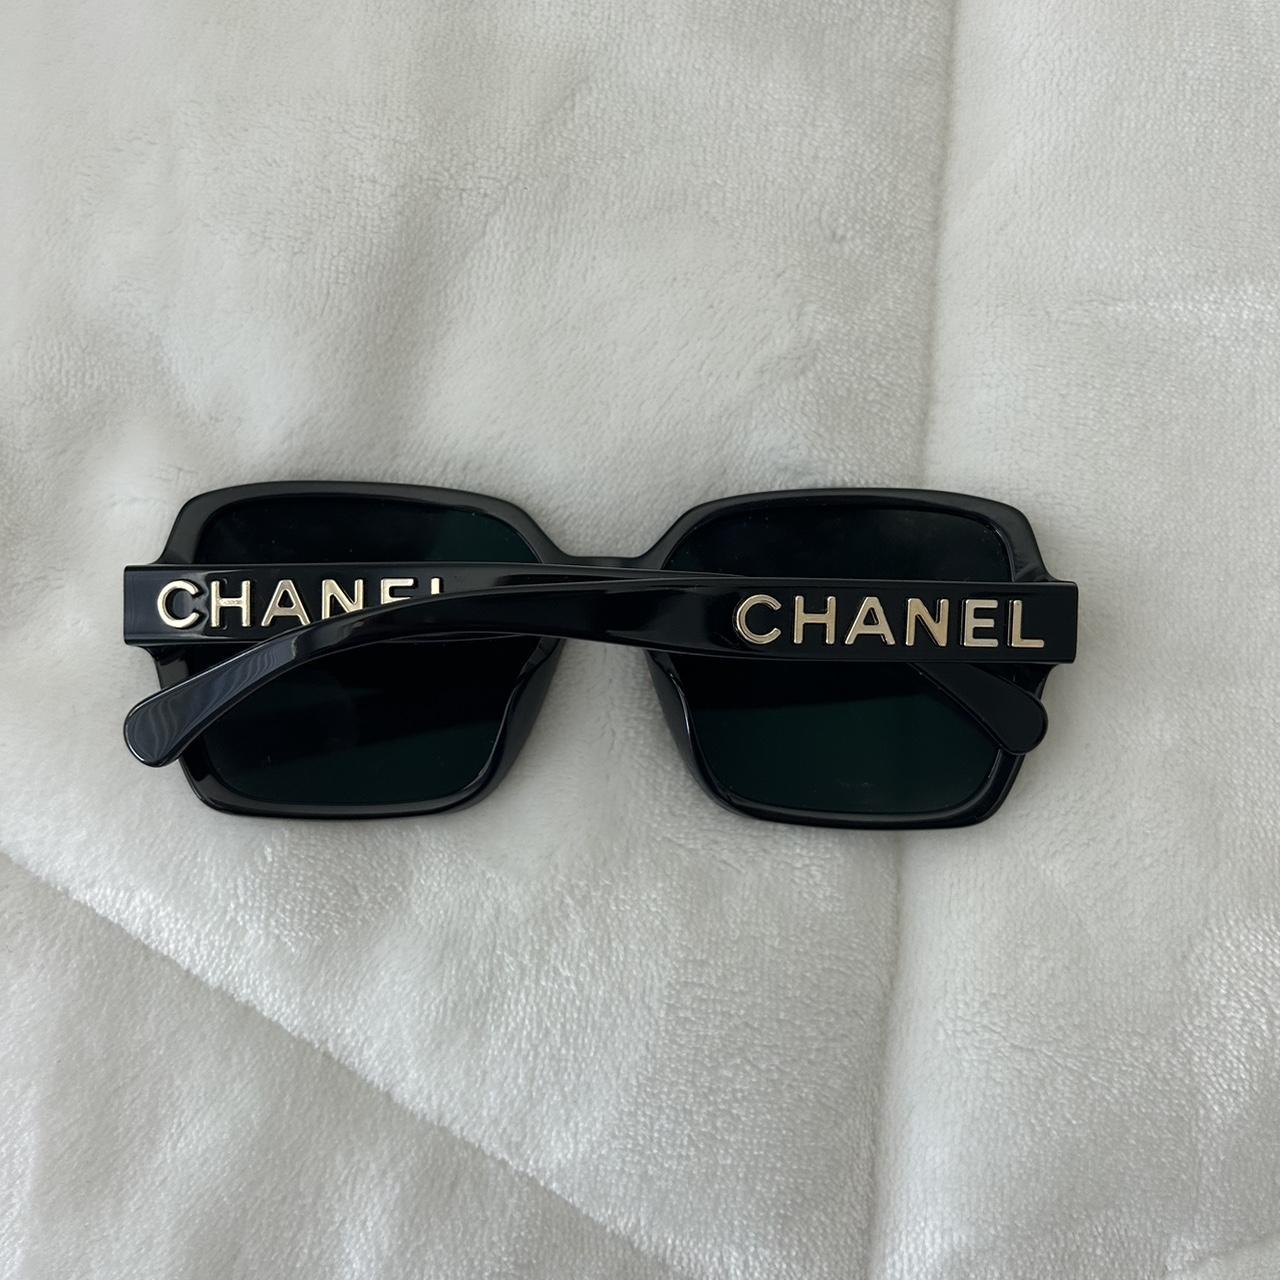 Vintage Chanel green gradient sunglasses 🫧, So cute